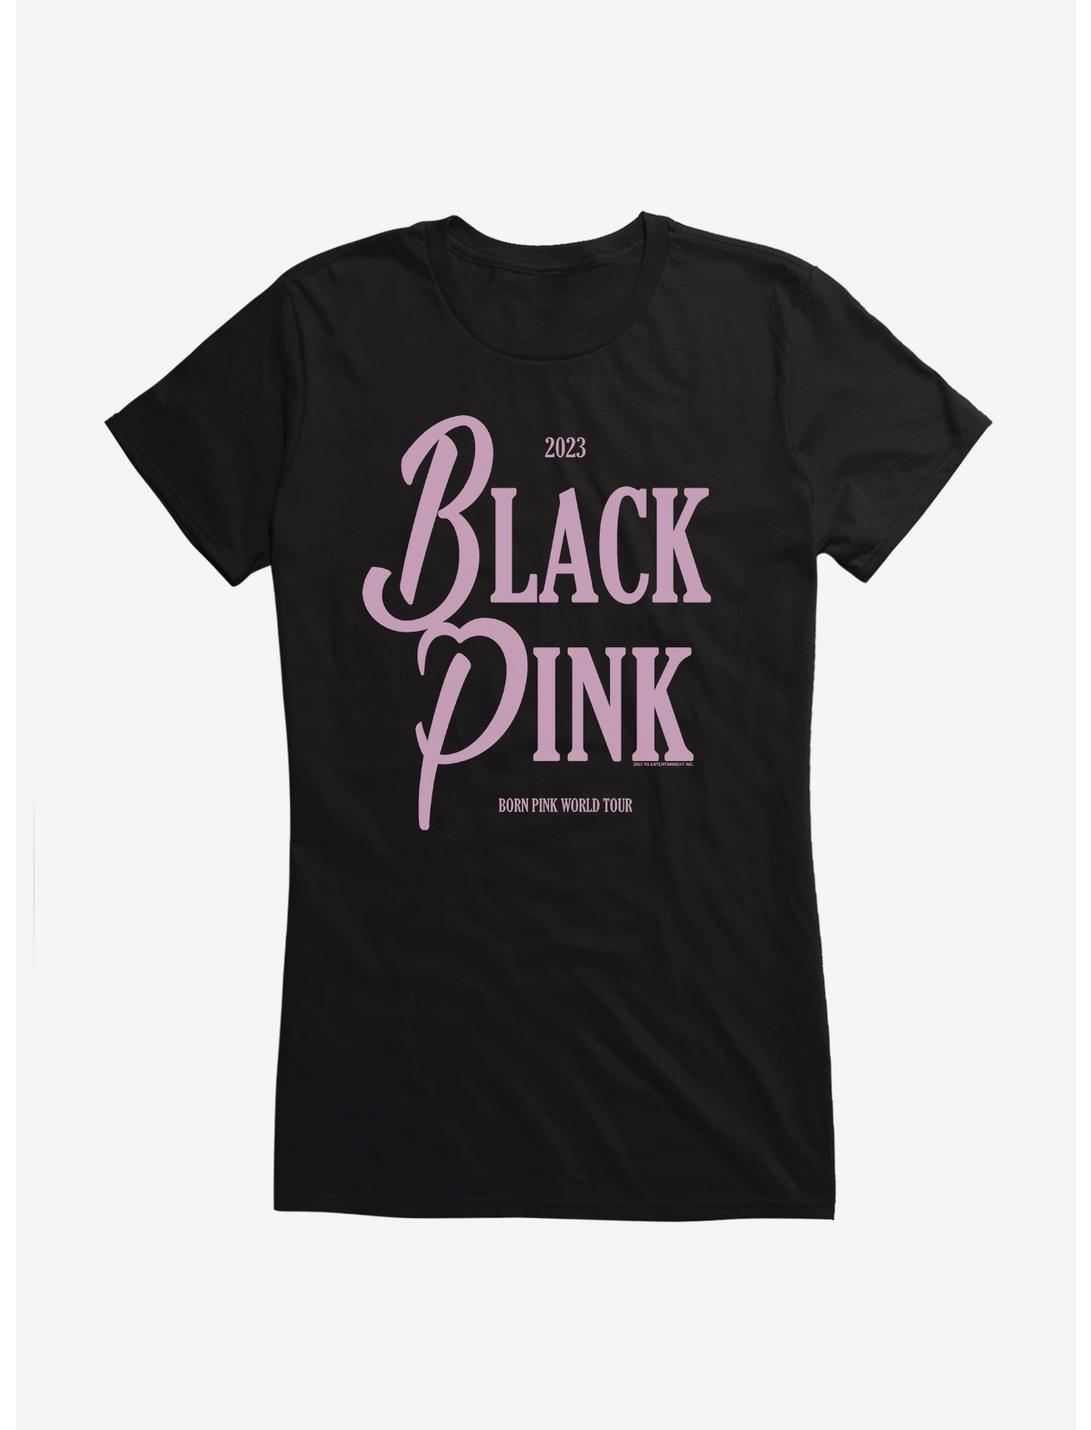 Black Pink 2023 Born Pink World Tour Girls T-Shirt, BLACK, hi-res